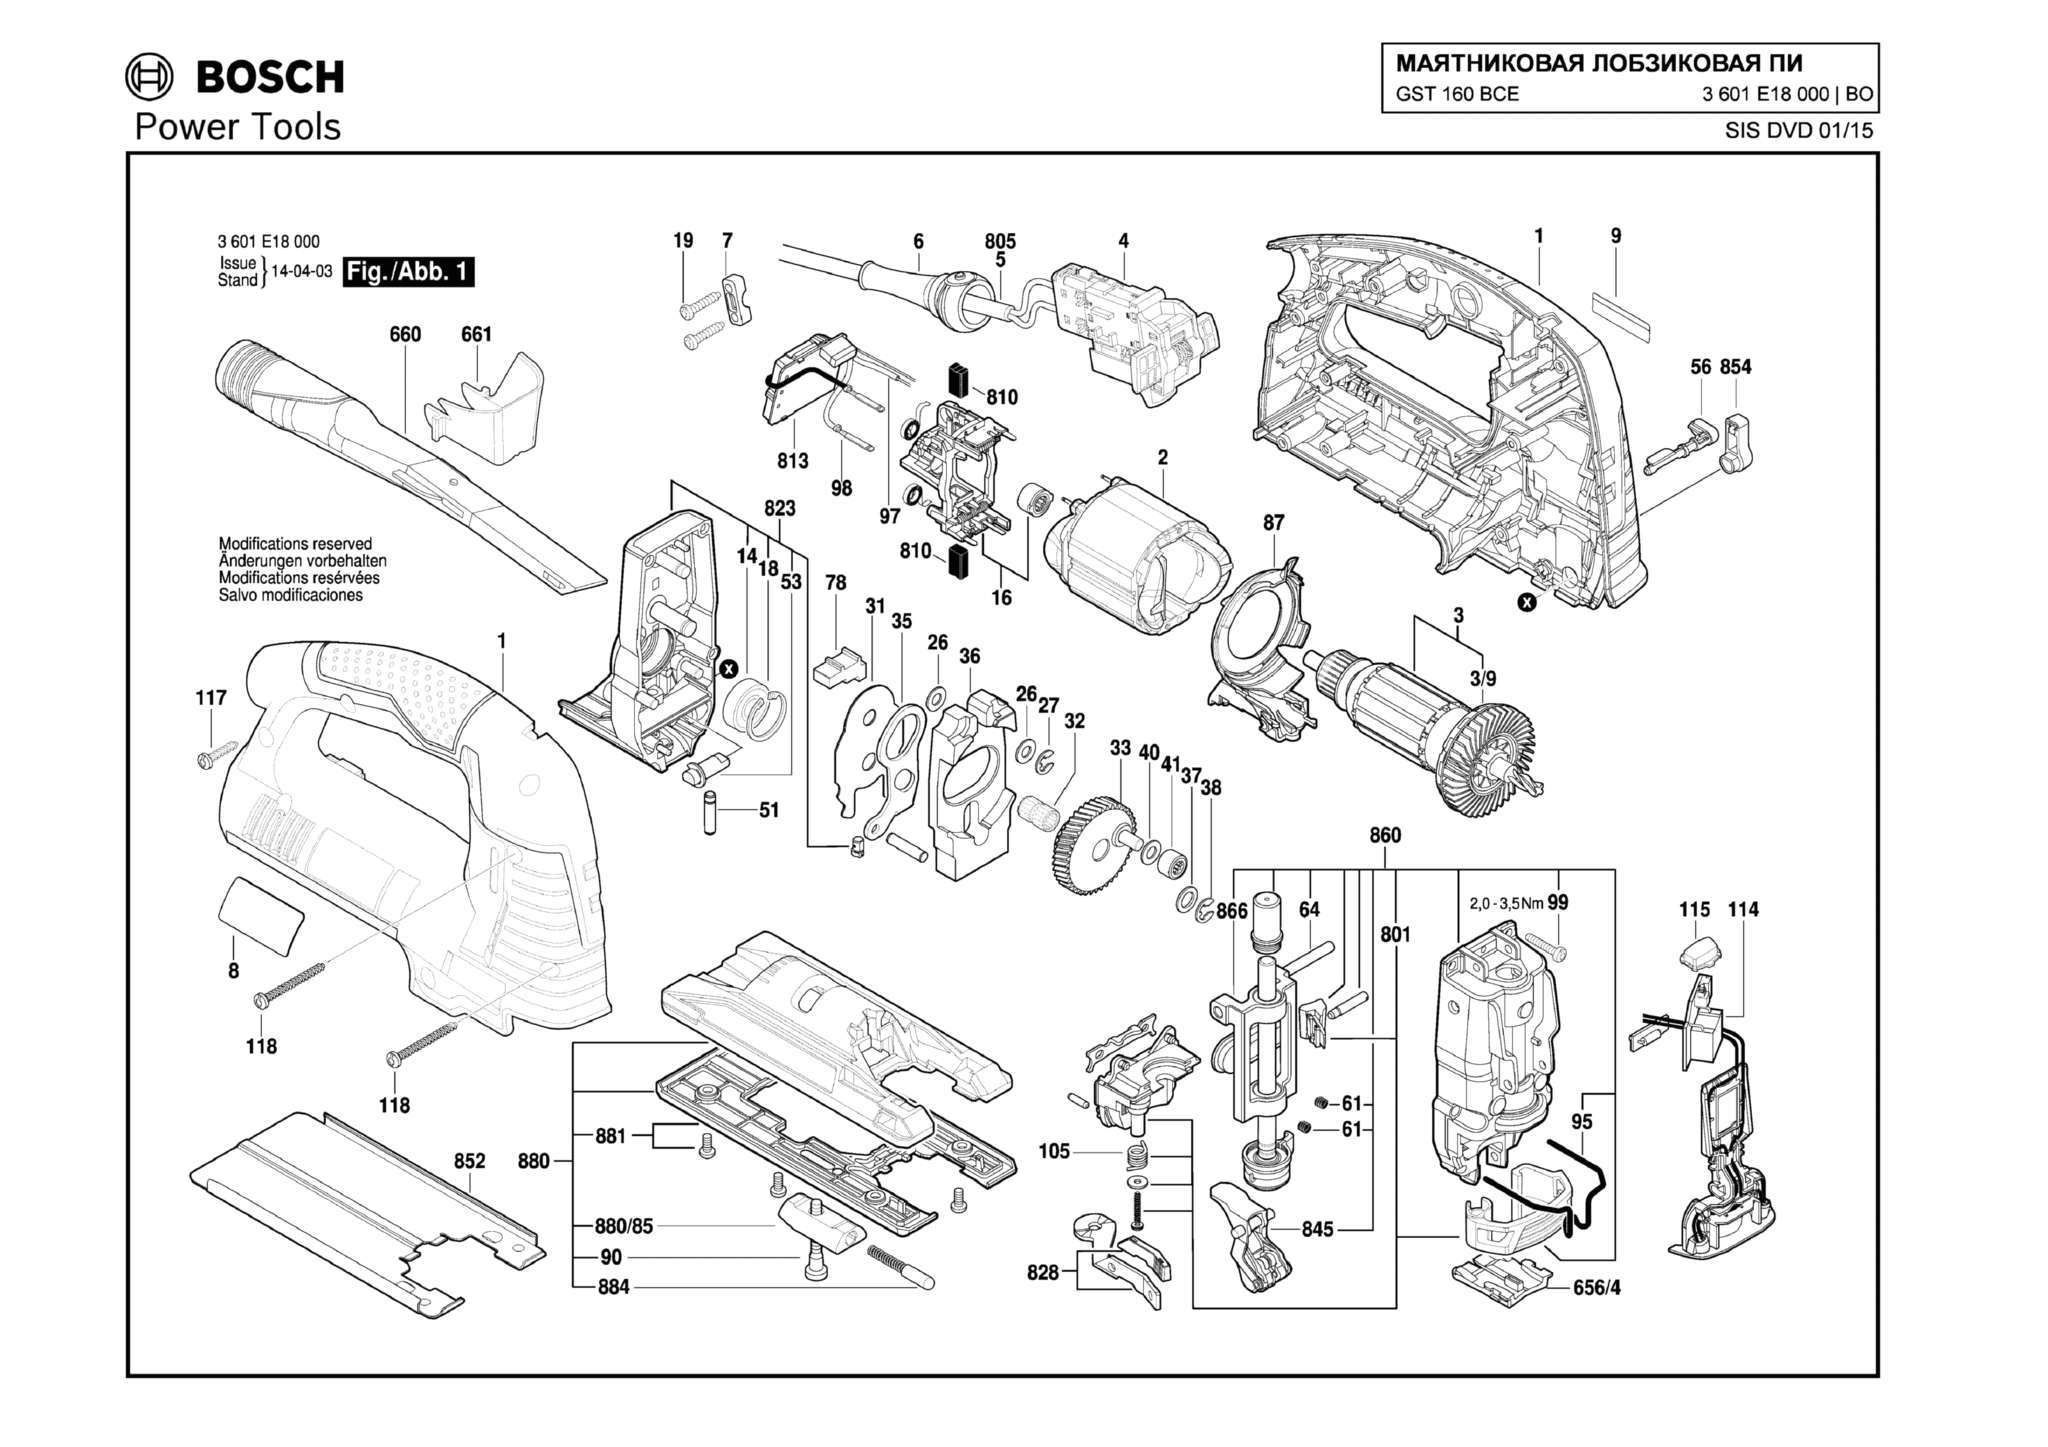 Запчасти, схема и деталировка Bosch GST 160 BCE (ТИП 3601E18000)